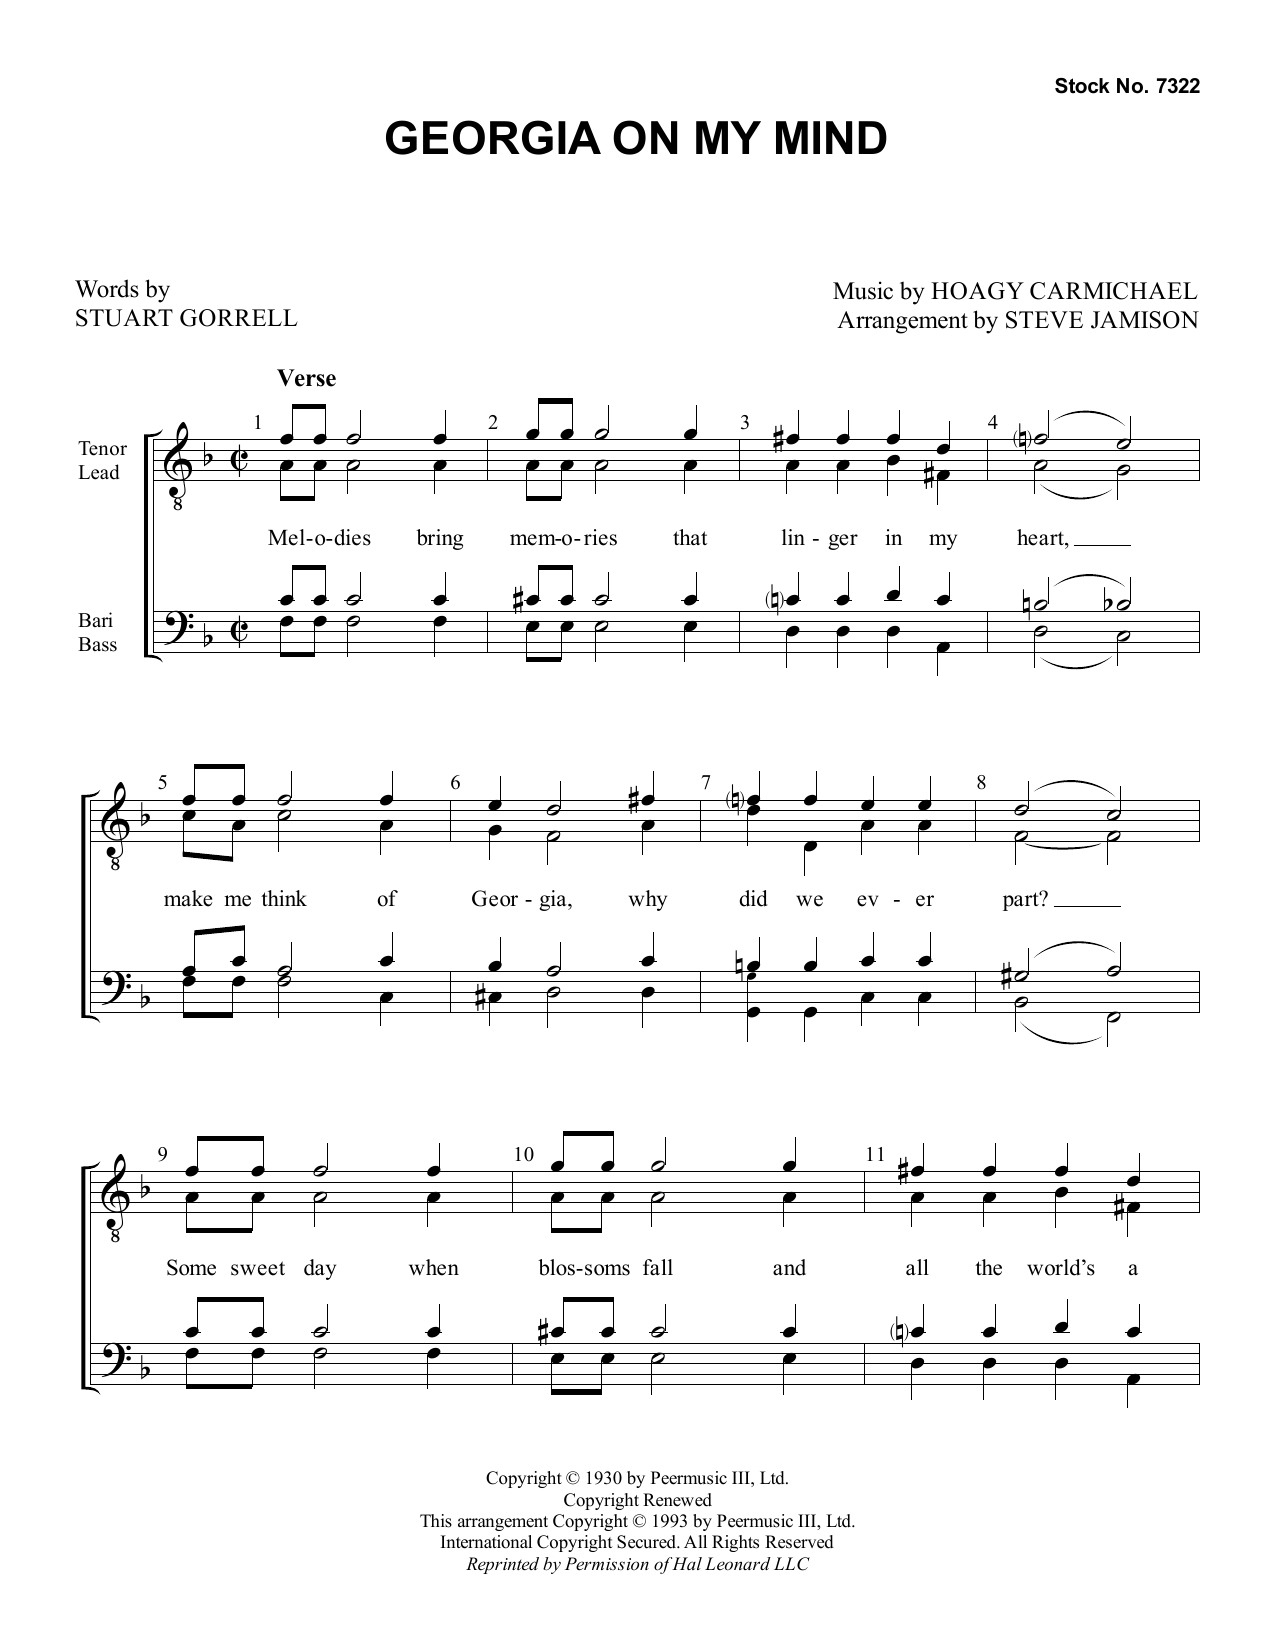 Stuart Gorrell and Hoagy Carmichael Georgia on My Mind (arr. Steve Jamison) Sheet Music Notes & Chords for TTBB Choir - Download or Print PDF